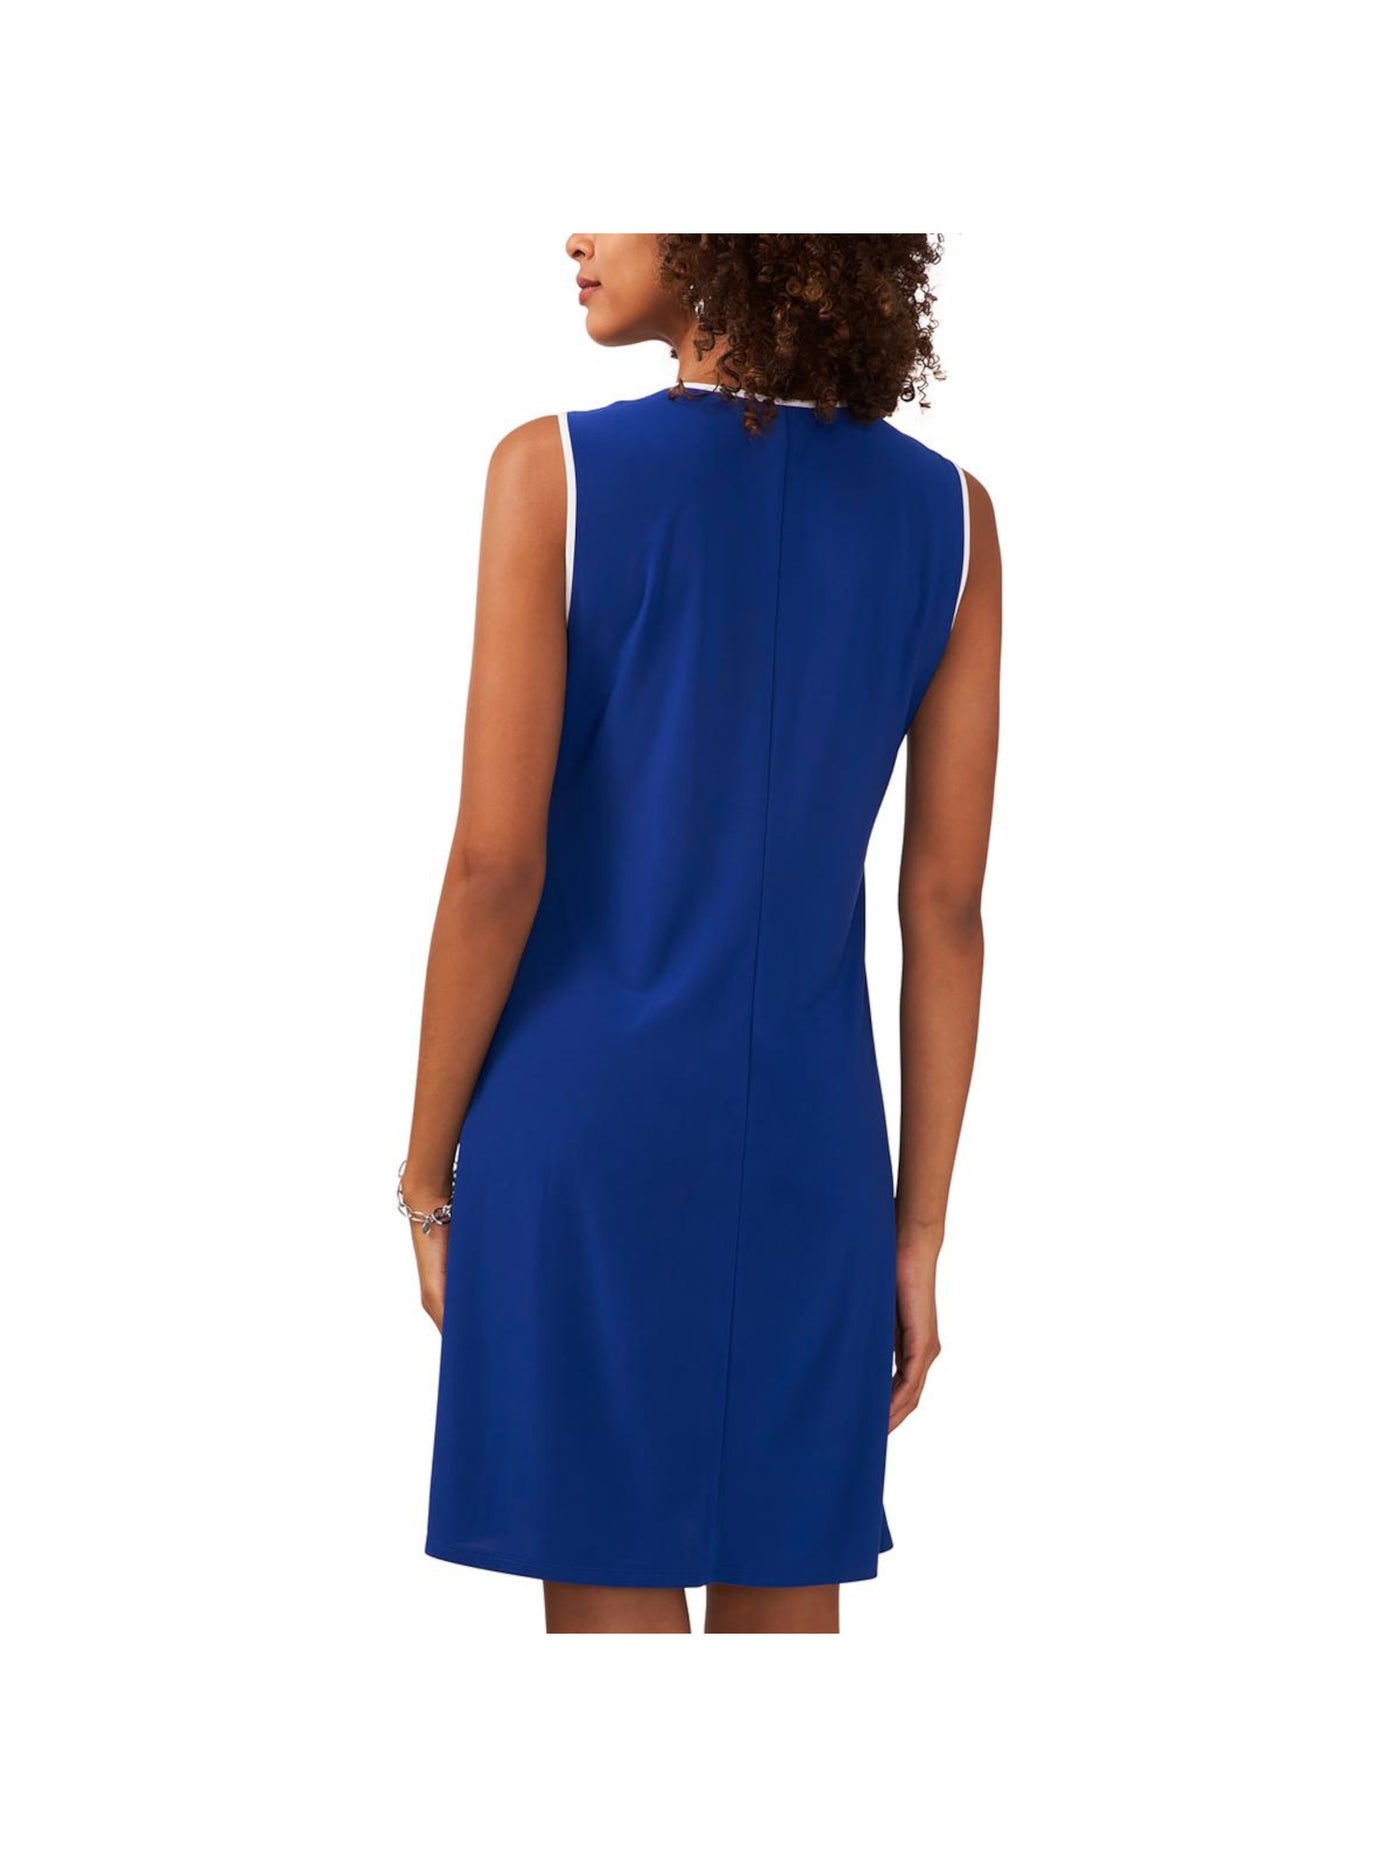 MSK Womens Blue Stretch Zippered Sleeveless Jewel Neck Above The Knee Shift Dress L